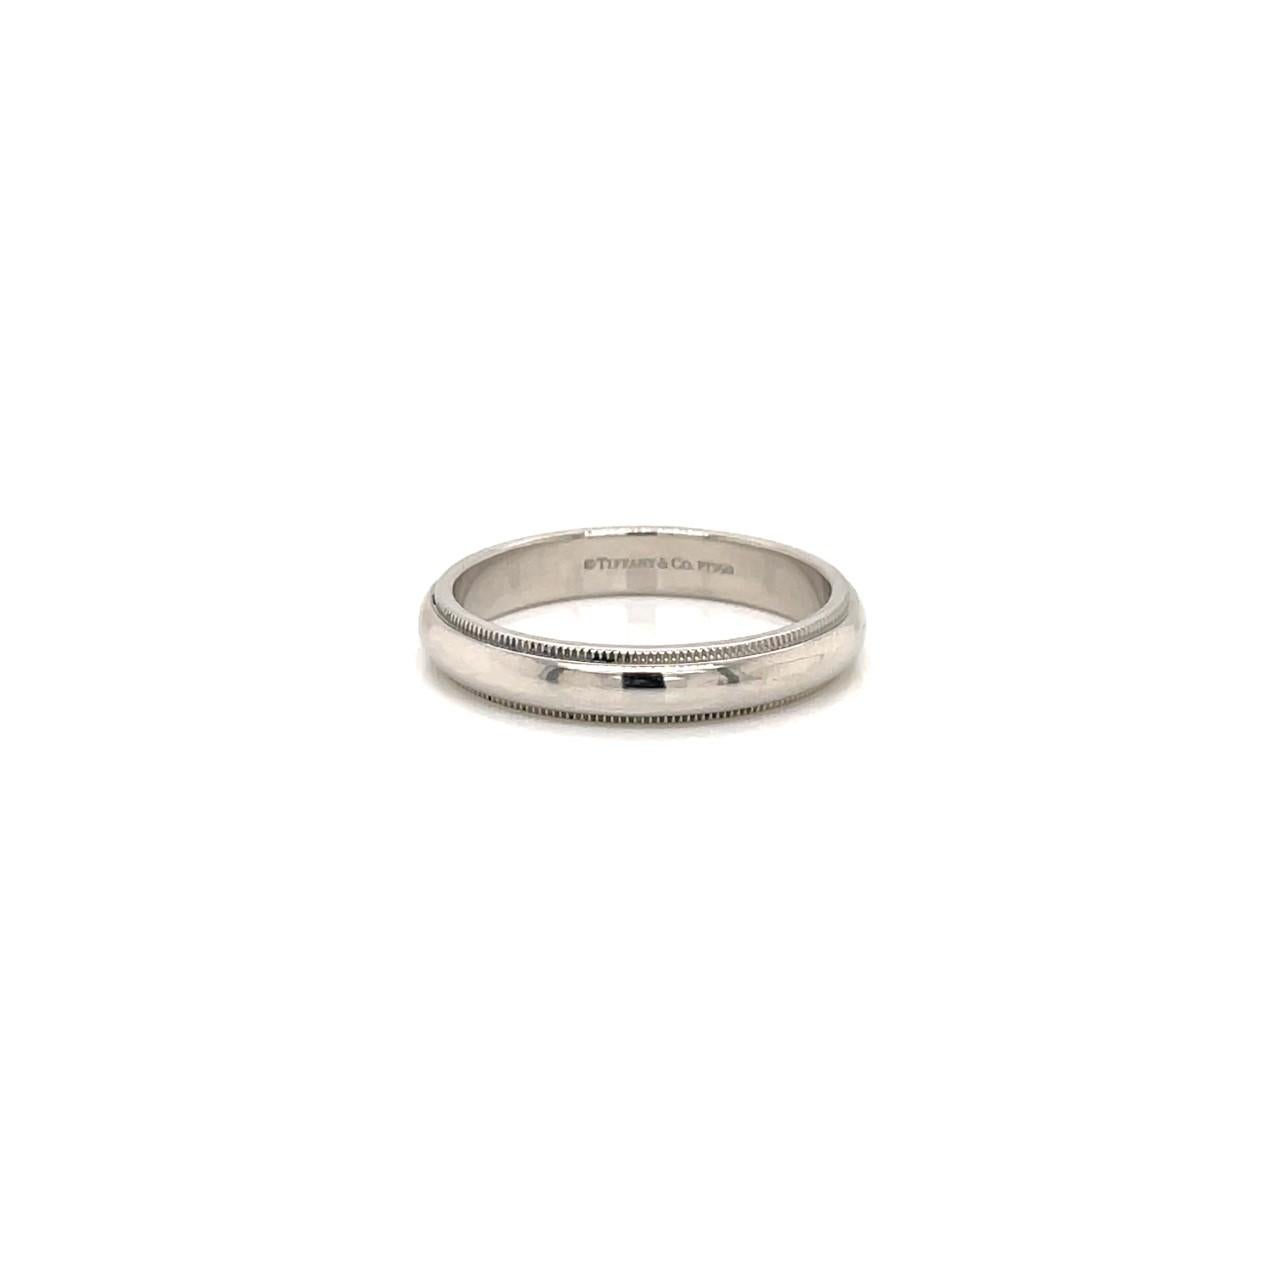 Men's Tiffany & Co Platinum Milgrain Wedding Band Ring
Size 10.5
Includes box